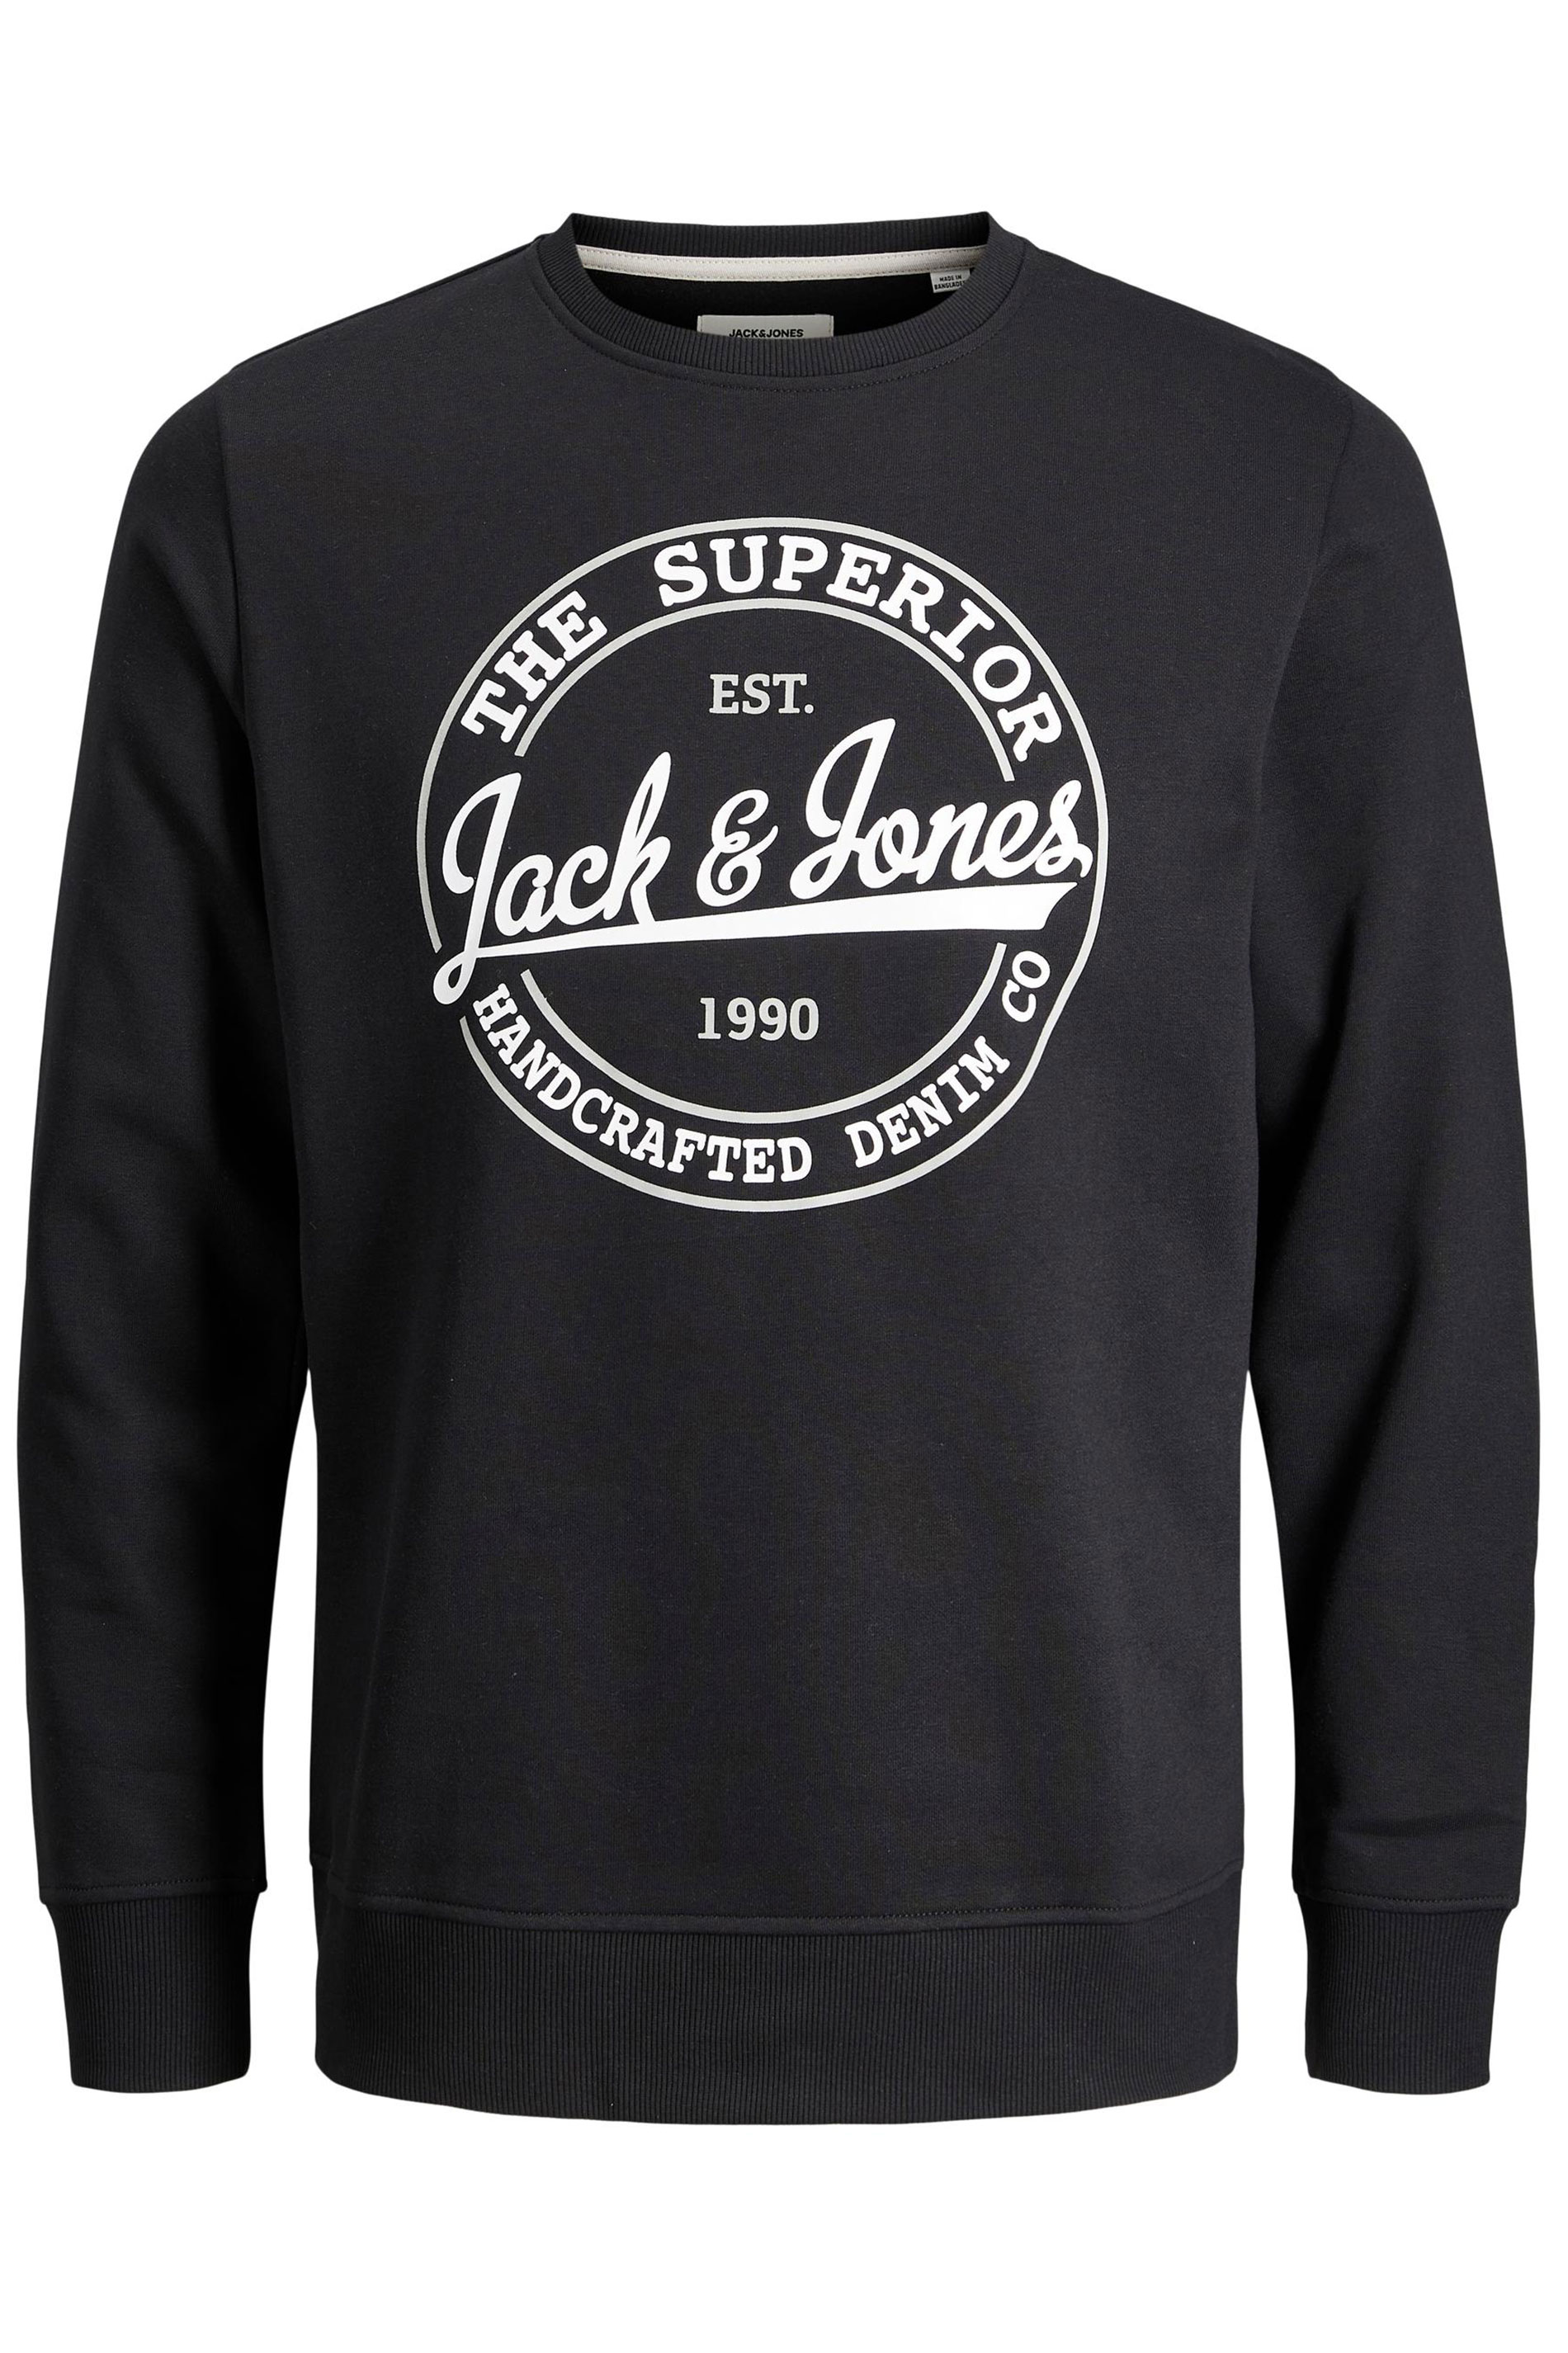 JACK & JONES Black Brat Sweatshirt | BadRhino 2